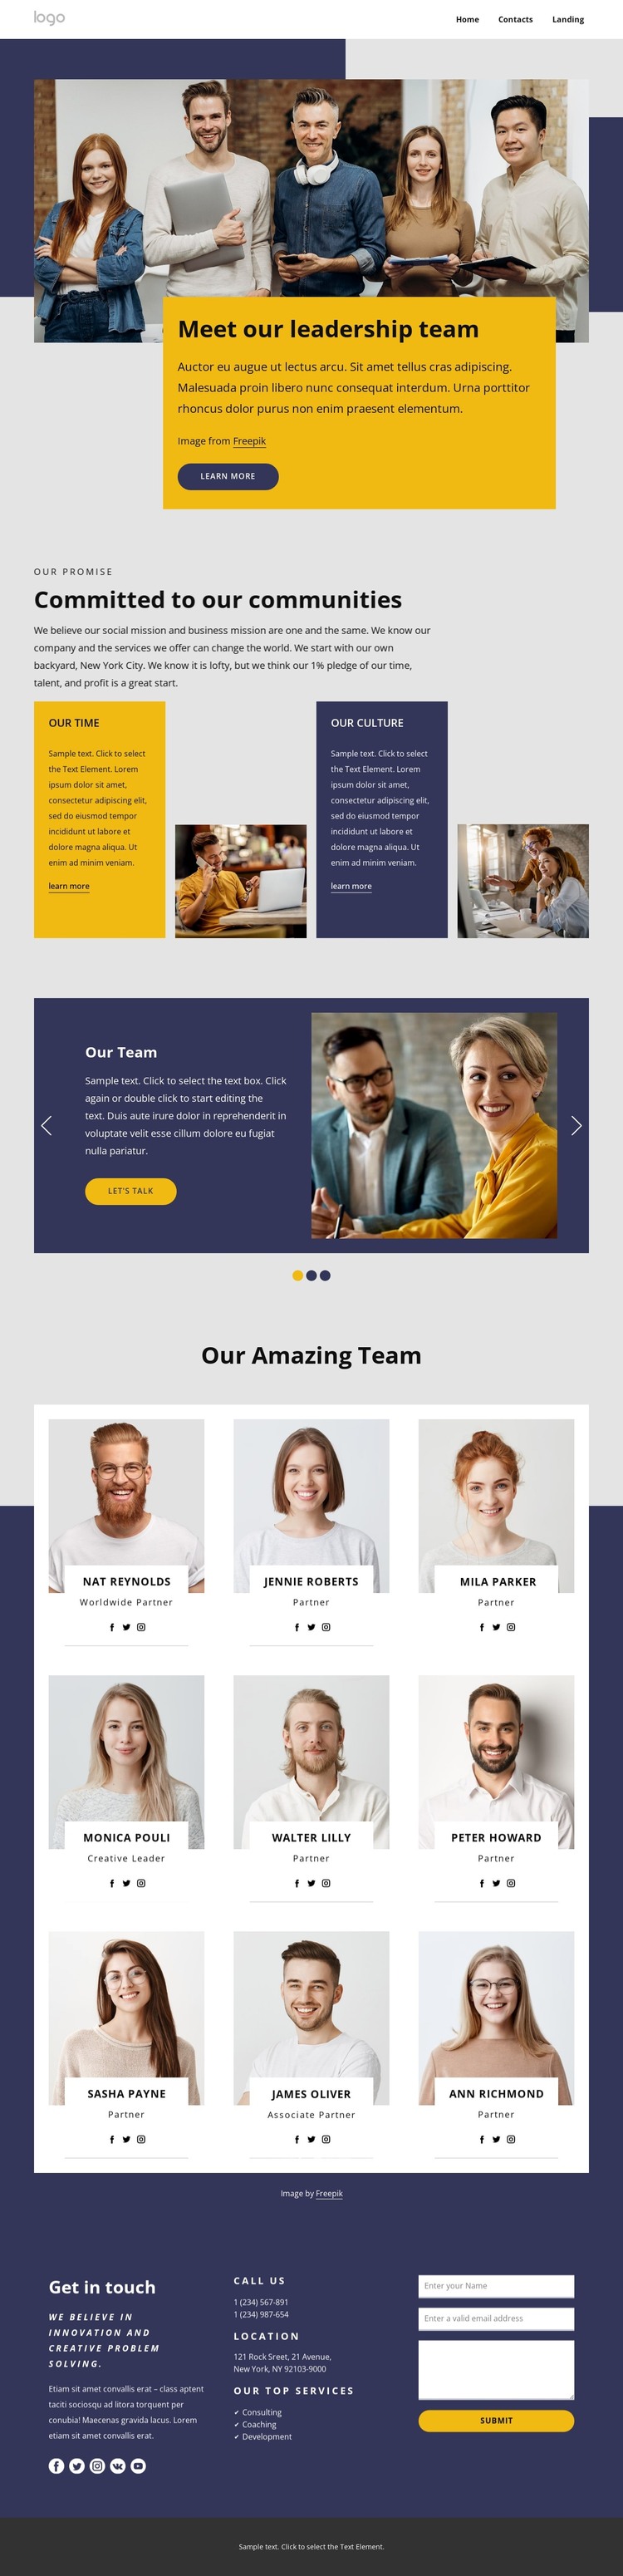 Meet our leadership team Web Design